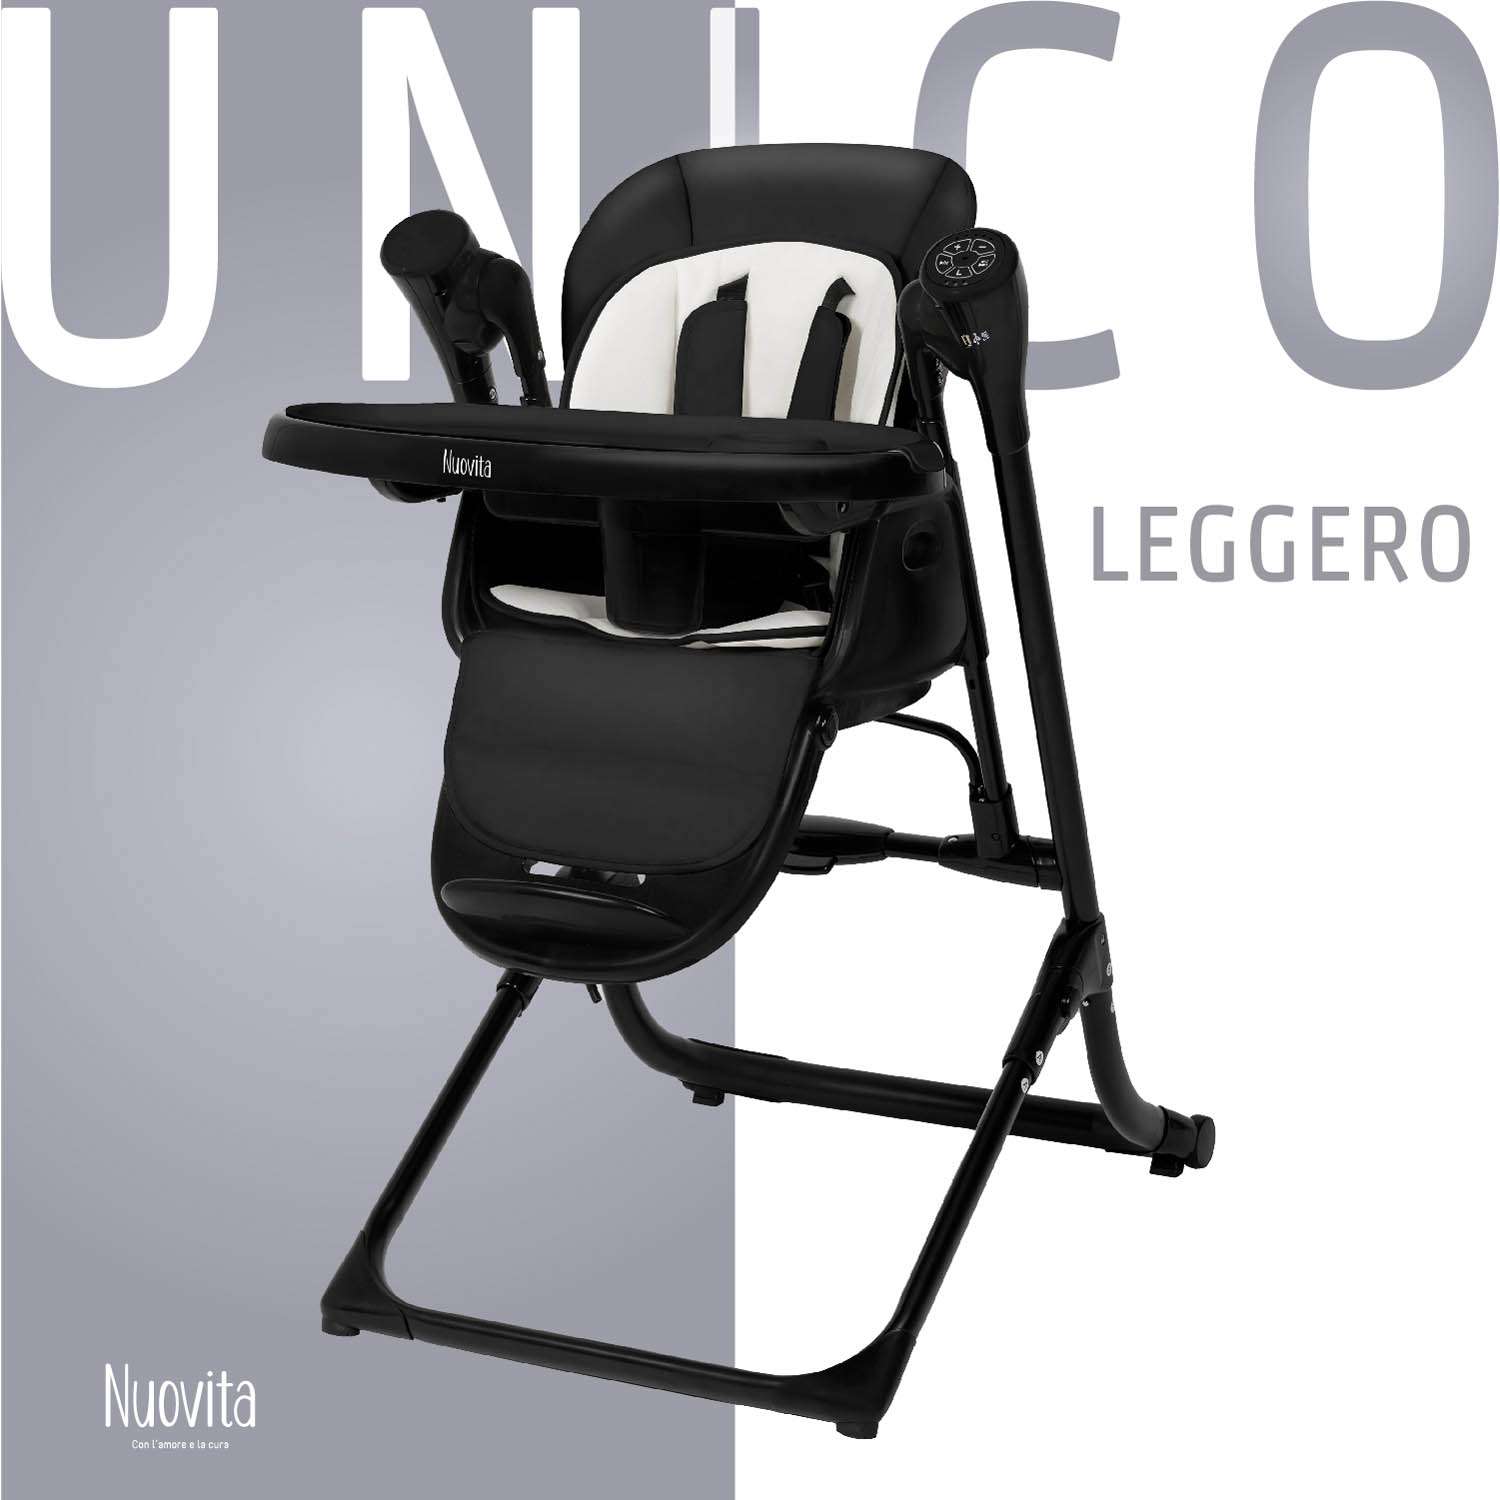 Стульчик для кормления 3 в 1 Nuovita Unico Leggero Nero - фото 1